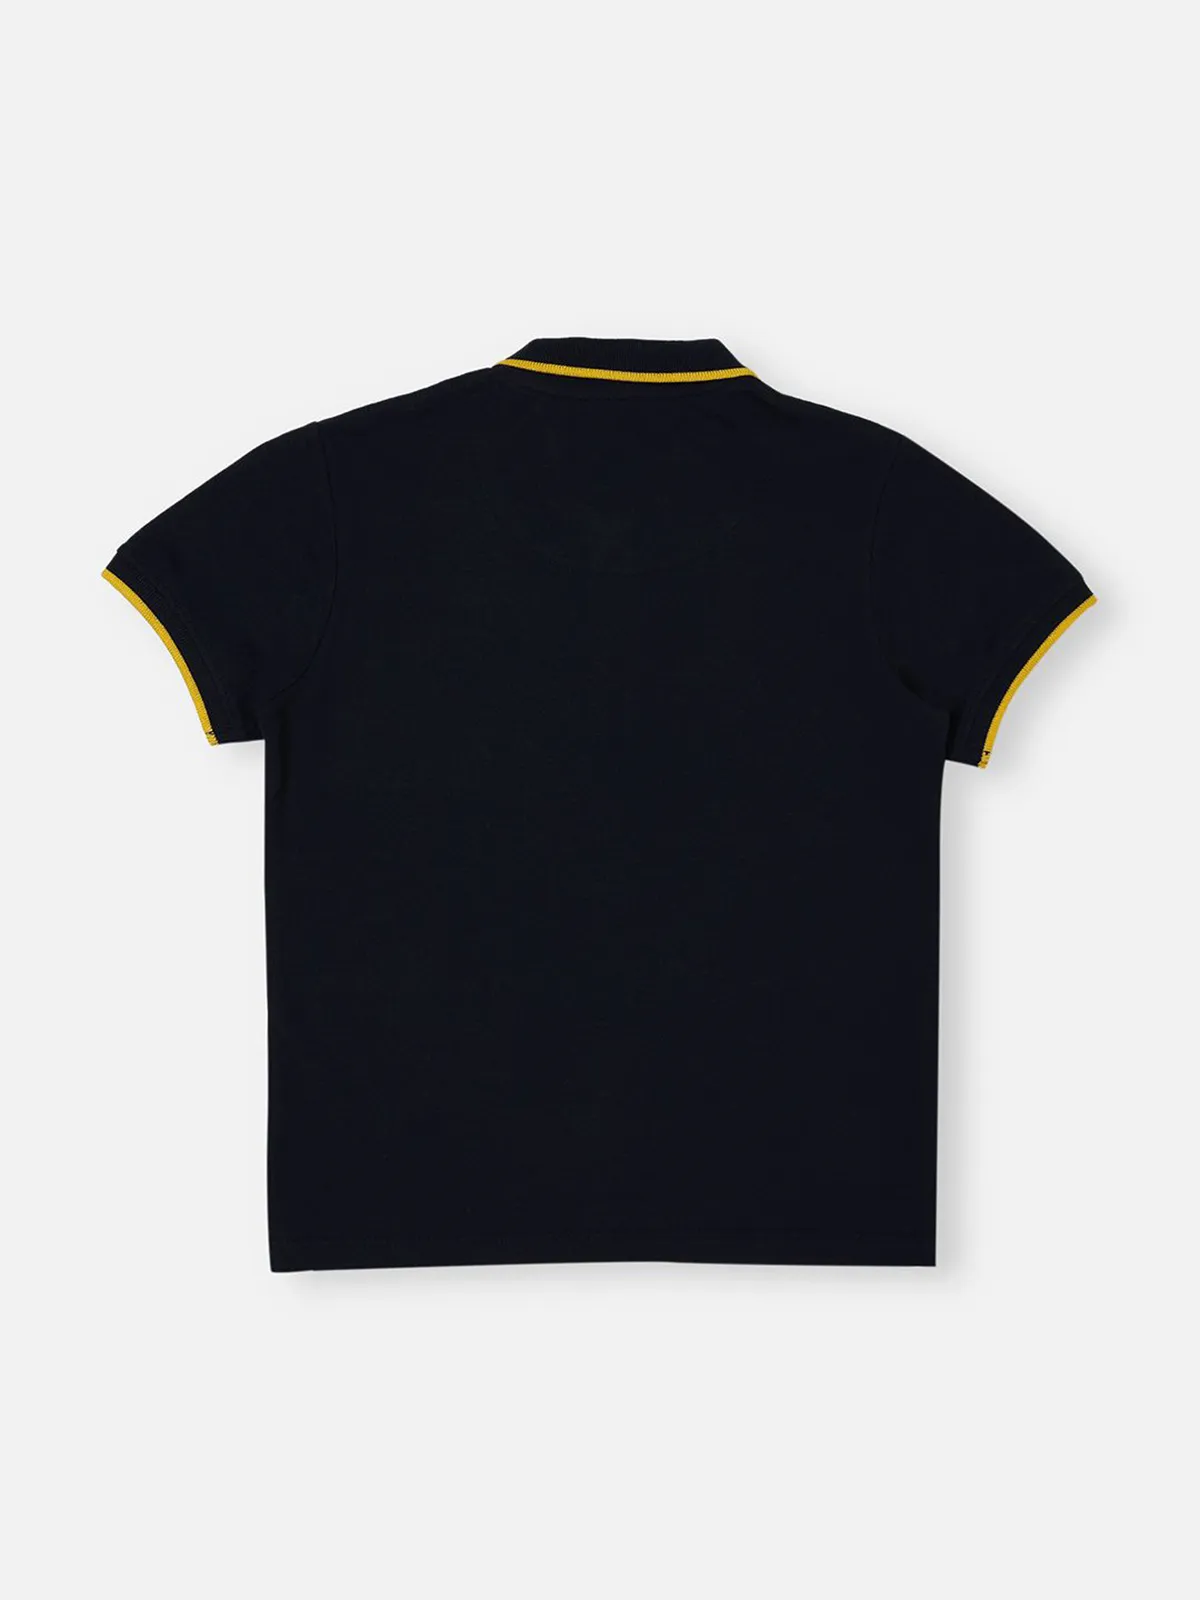 PEPE JEANS black plain polo cotton t-shirt